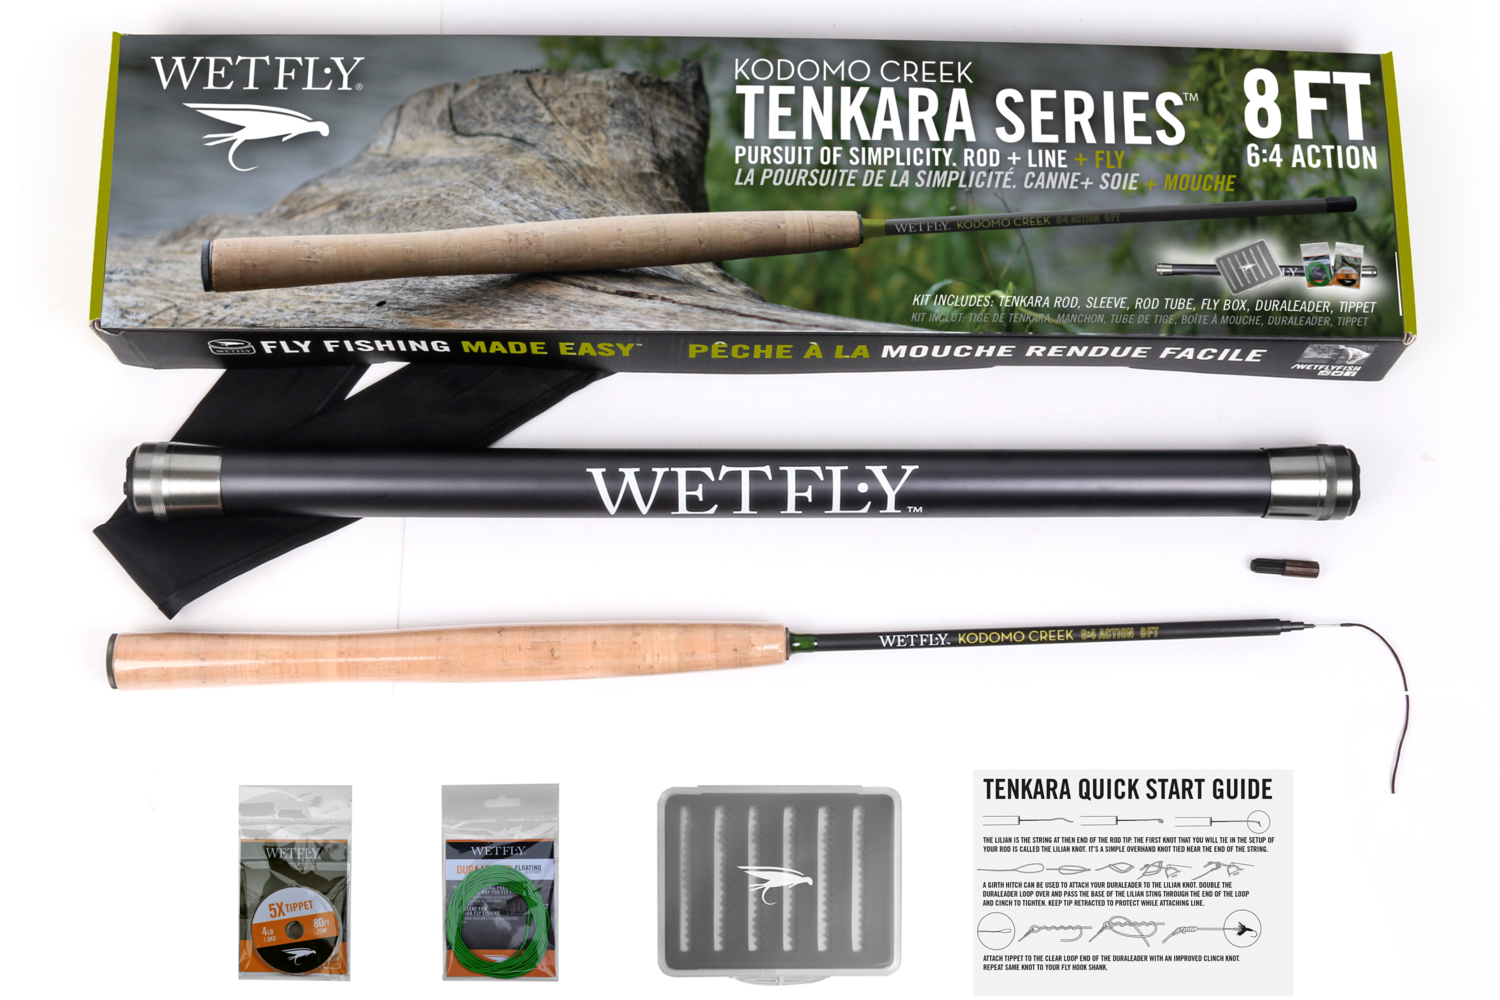 Kodomo Creek Tenkara Kit 8ft — WETFLY